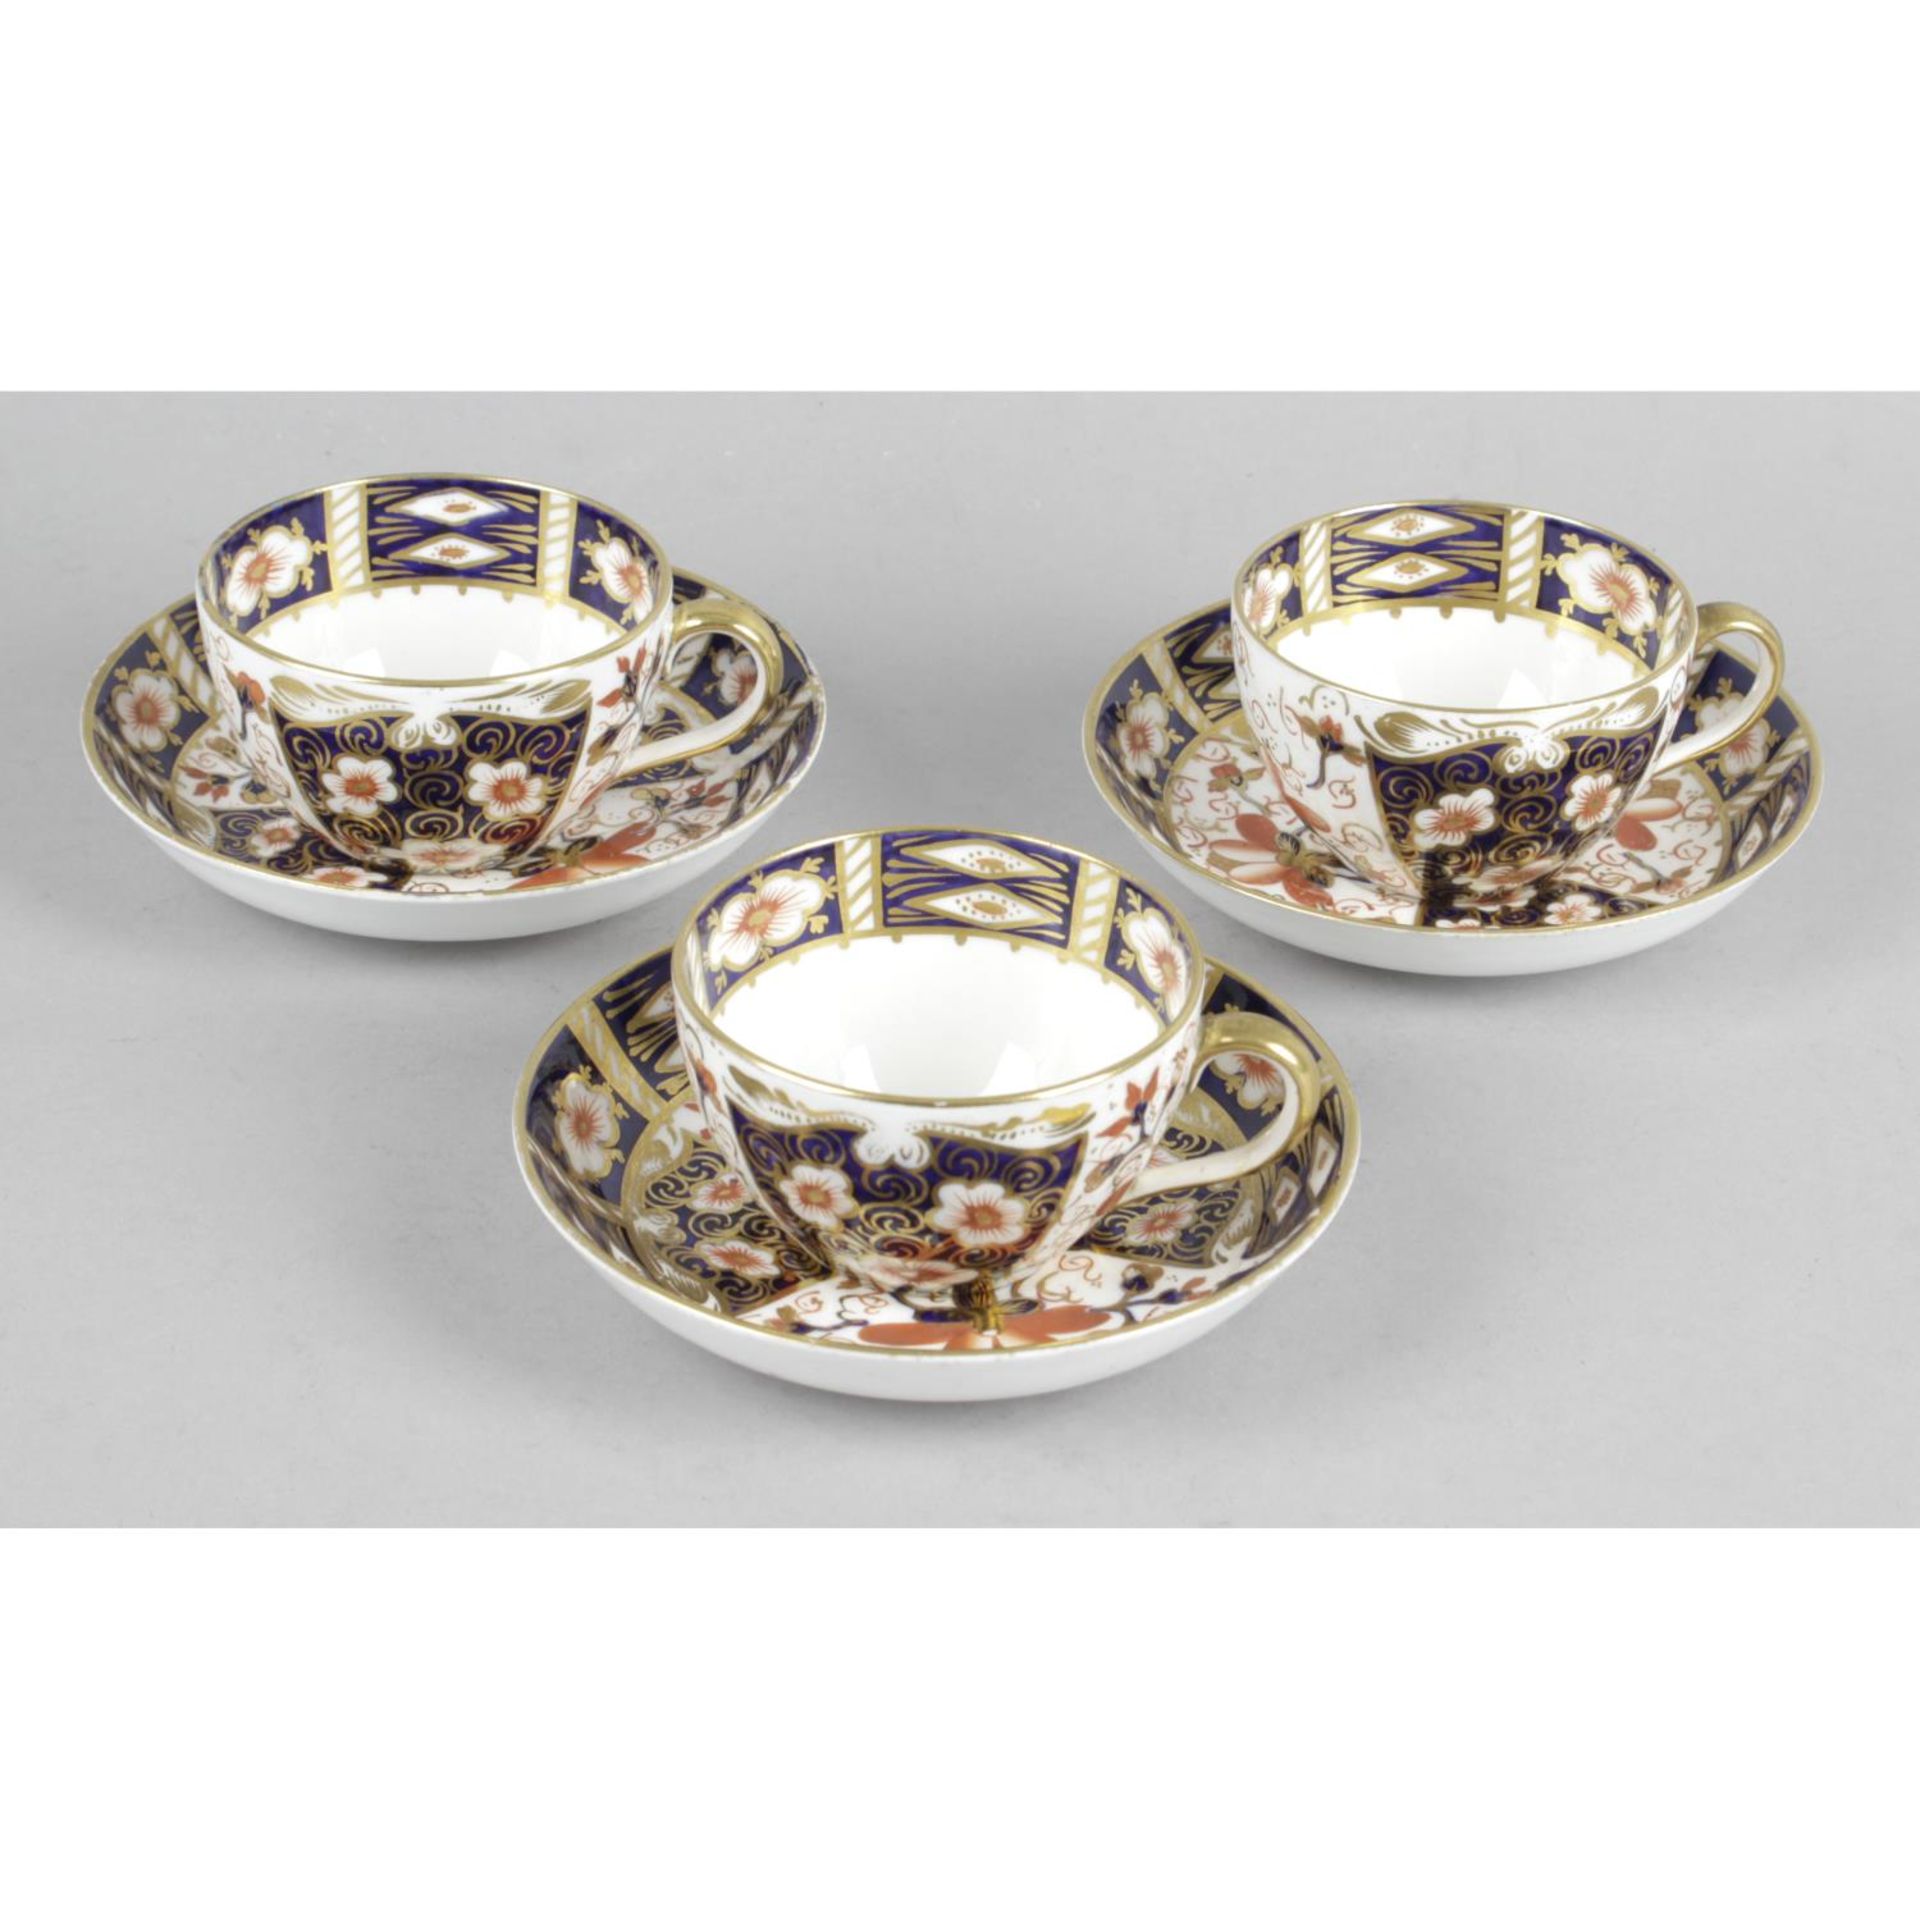 A selection of Royal Crown Derby bone china tea wares,